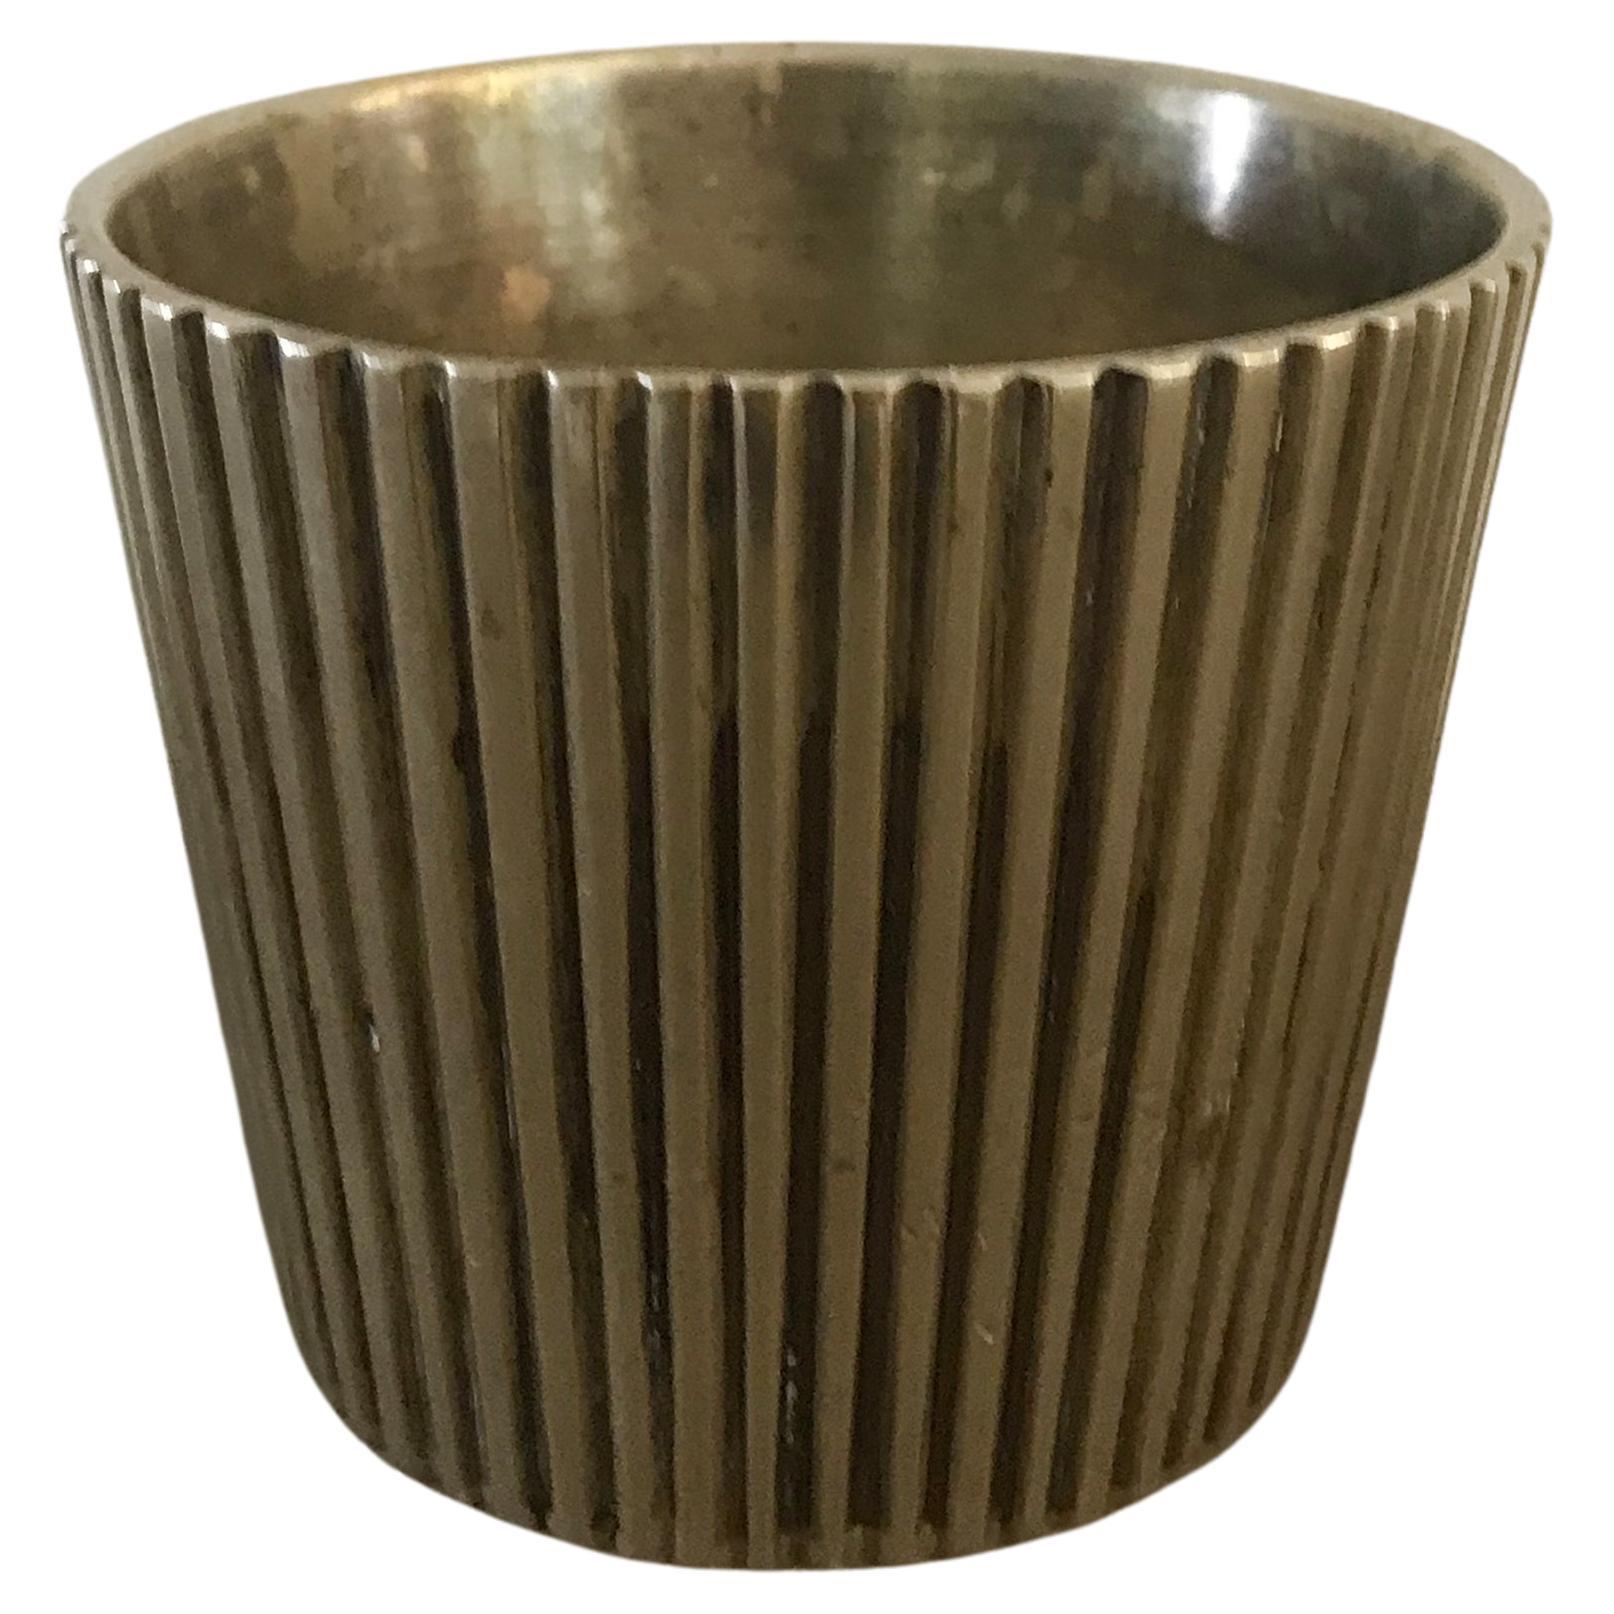 Scandinavian Midcentury Modern Design Solid Brass Vase 1950s For Sale